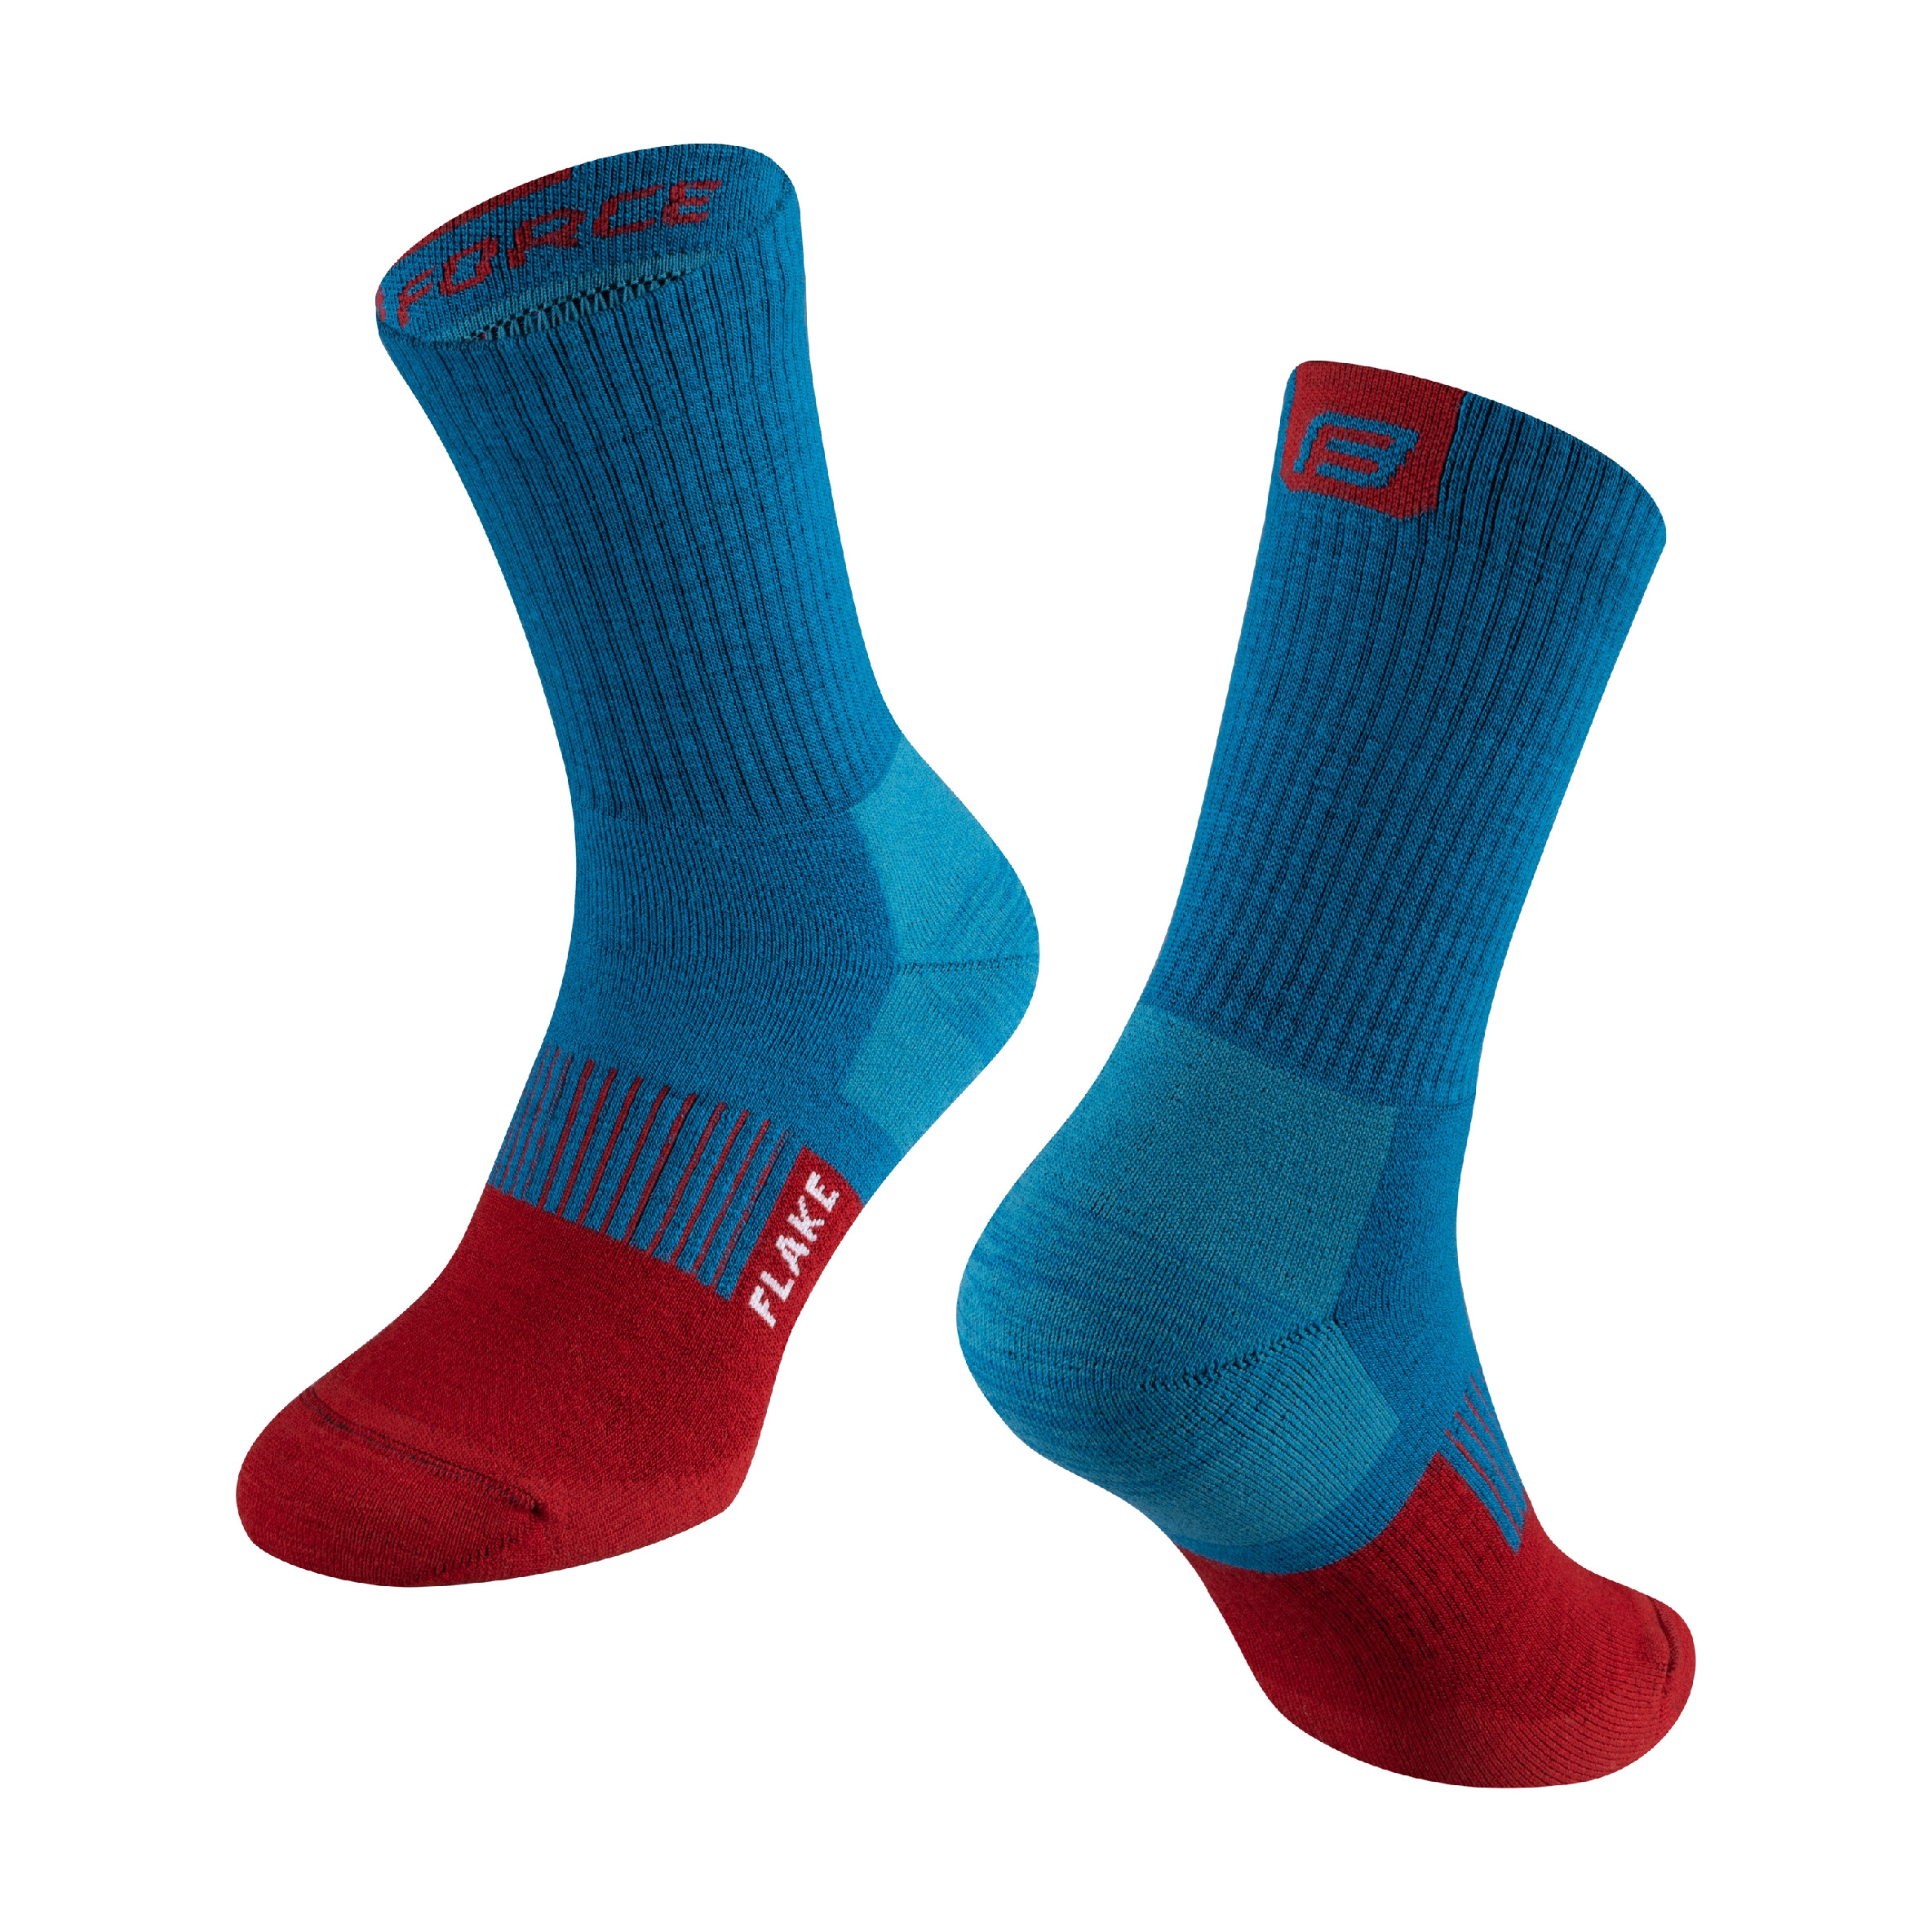 ponožky FORCE FLAKE termo, modro-červené S-M/36-41 Velikost: S-M